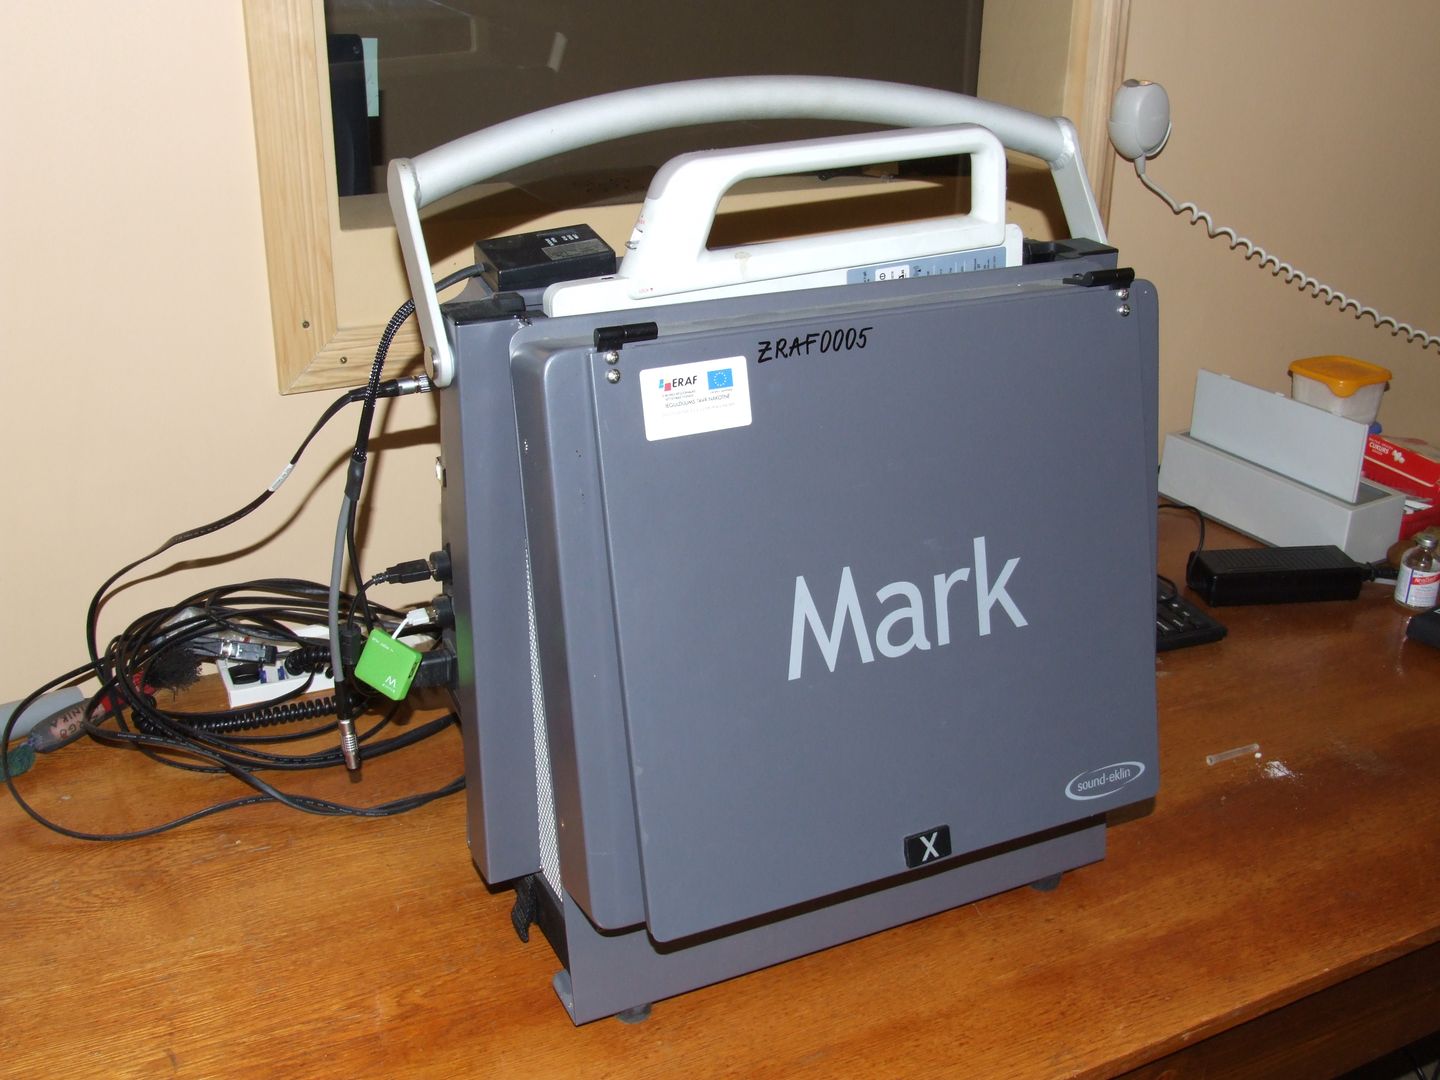 The Sound-Eklin Portable Digital Radiography System